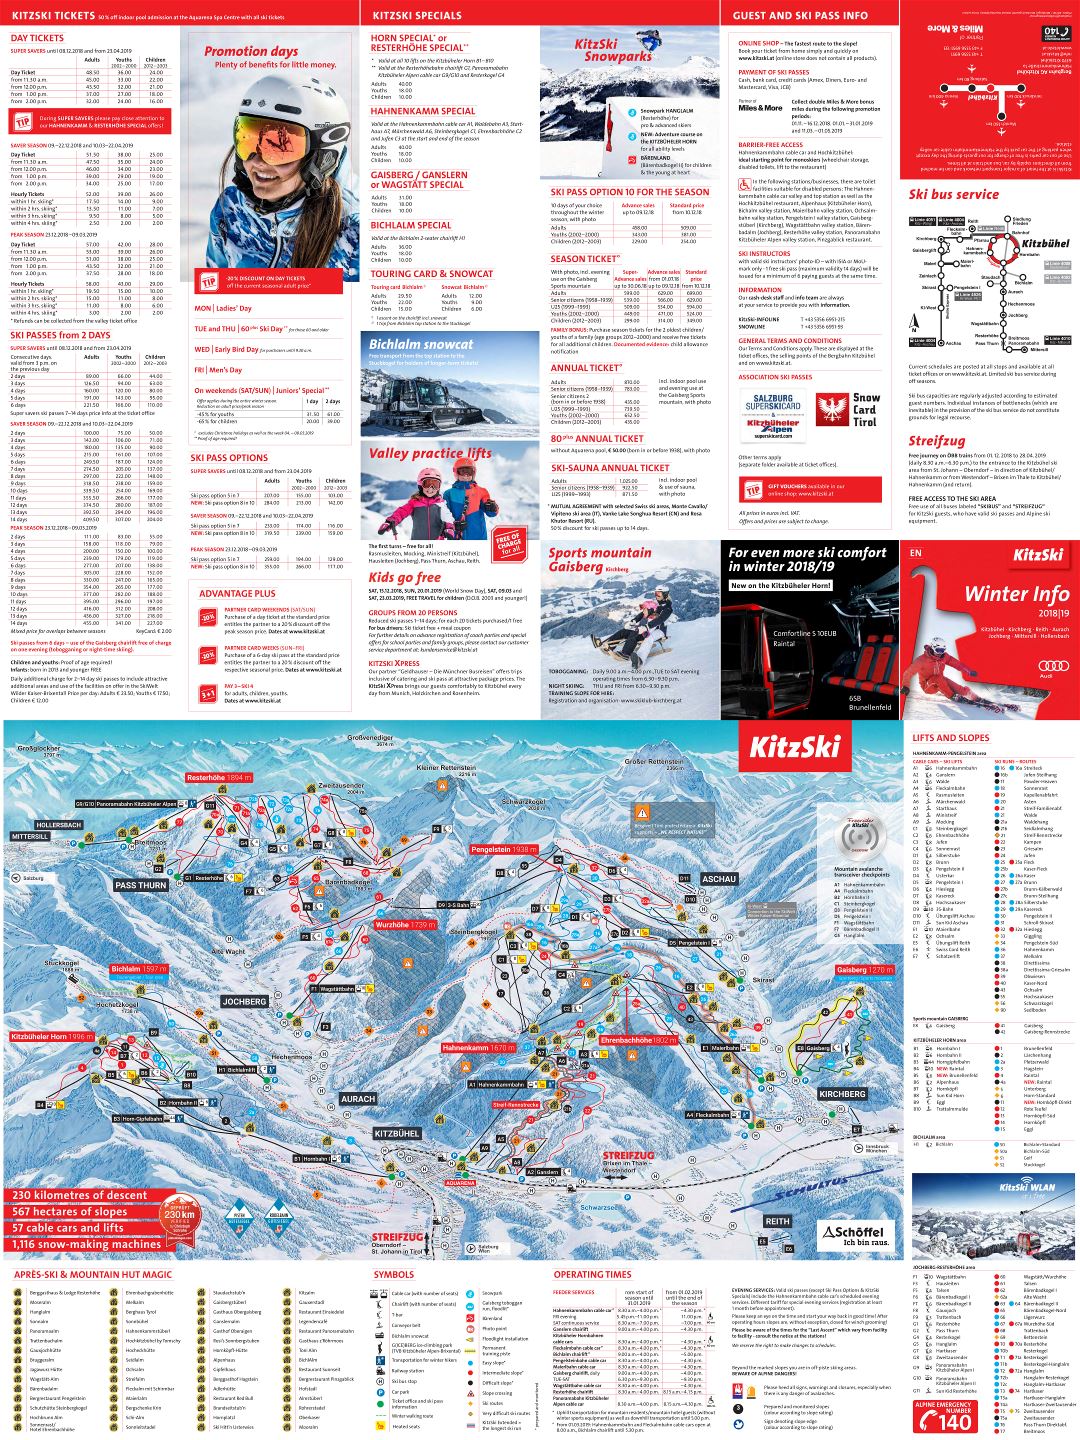 Large scale guide and piste map of KitzSki Ski Resort - 2018-2019